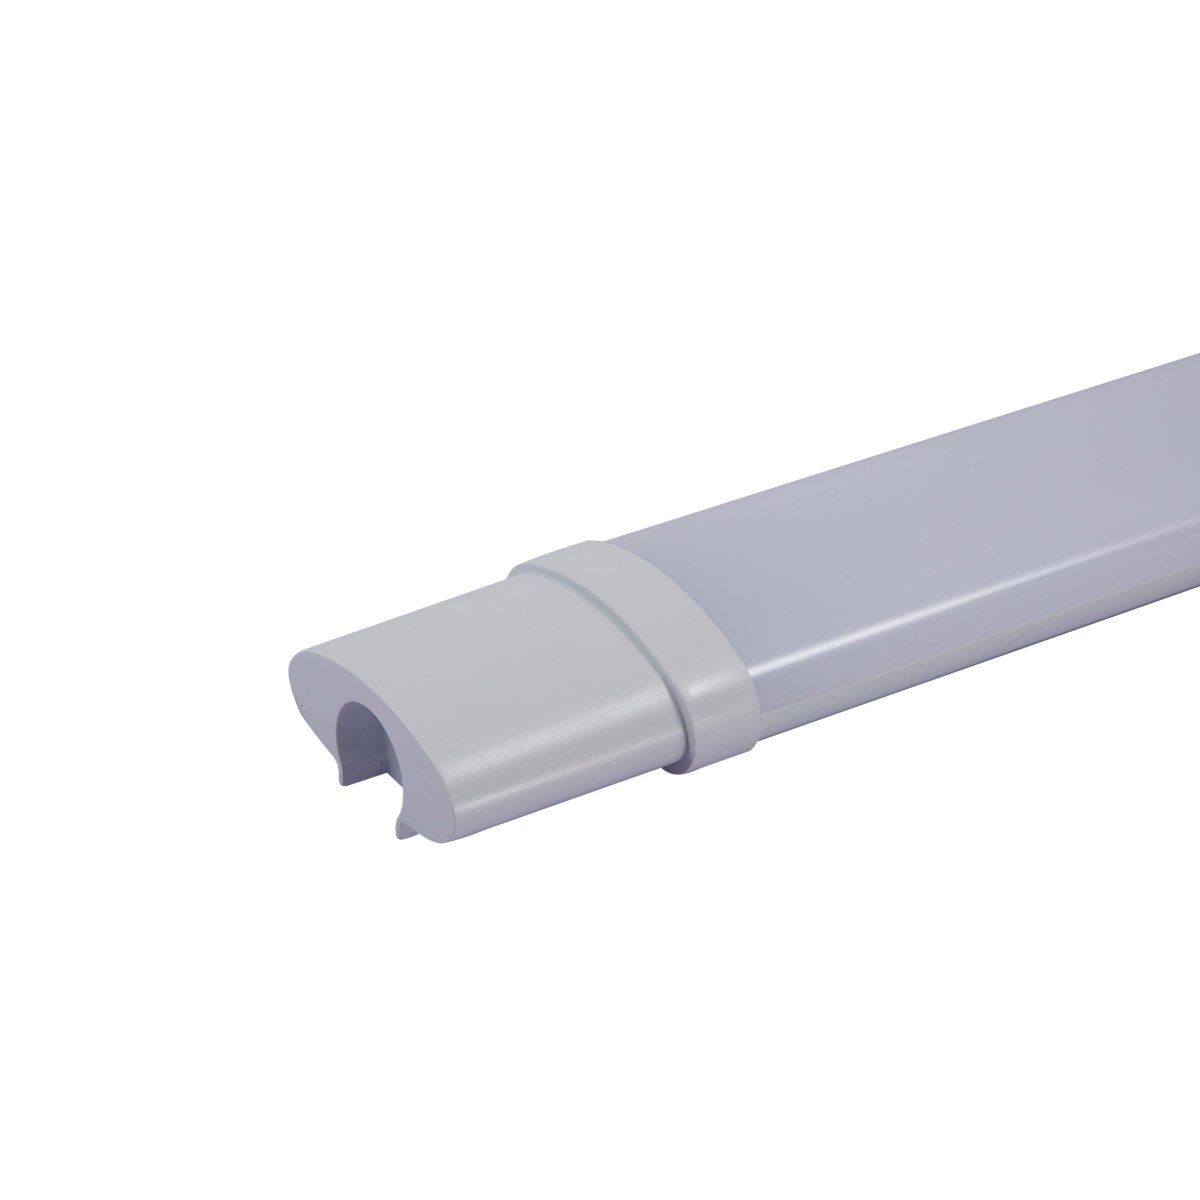 Main image of LED Tri-proof Slim Batten Linear Fitting 36W 5000K Cool White IP65 120cm 4ft